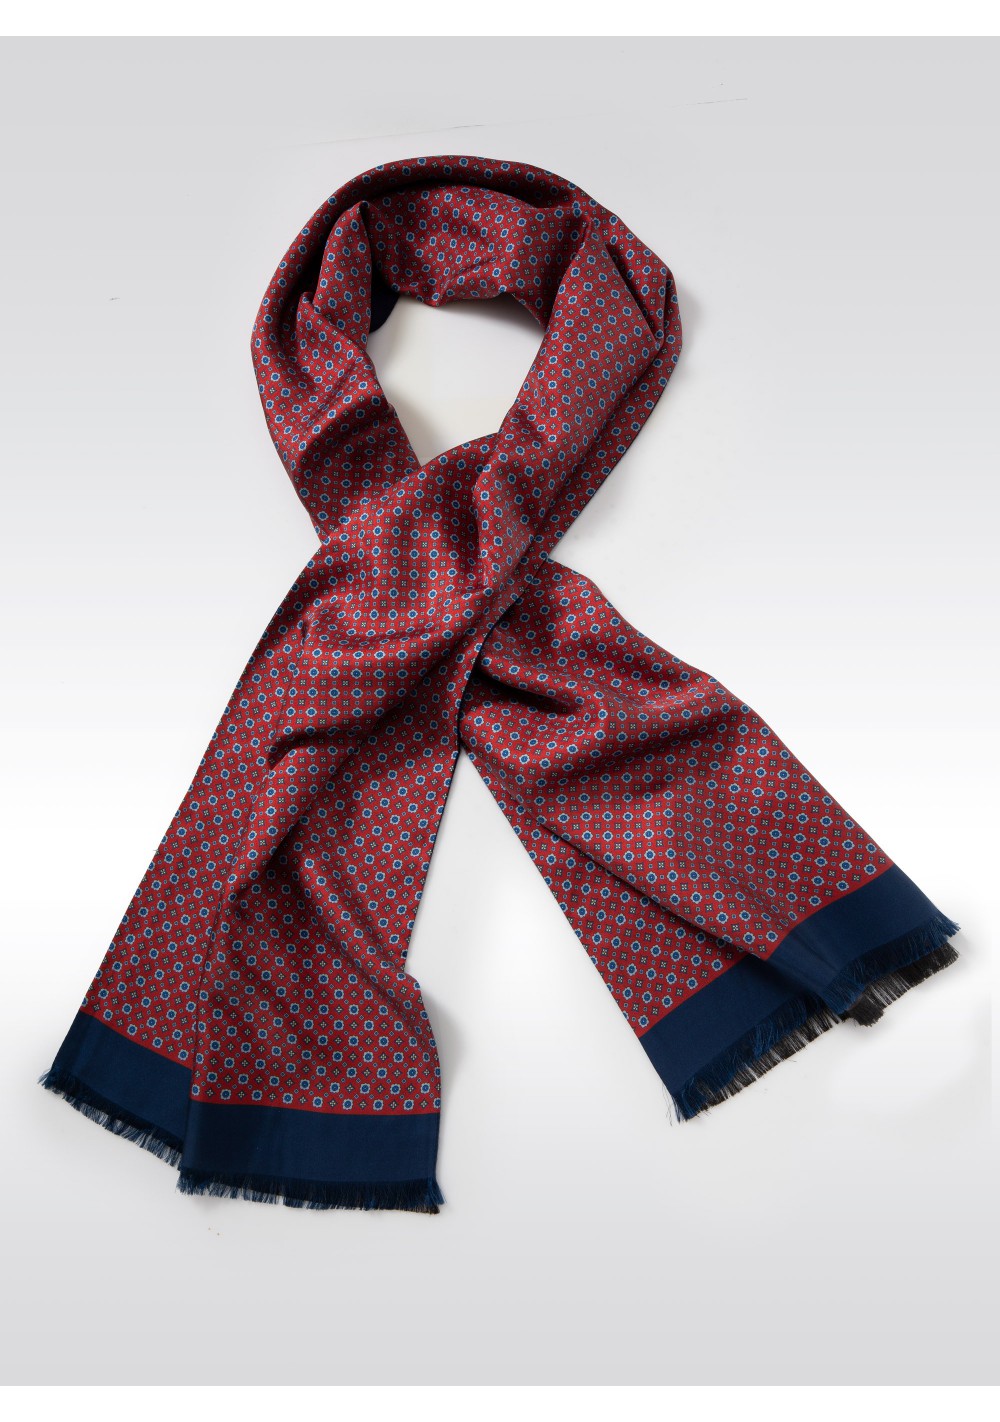 Geometric Print Menswear Silk Scarf in Burgundy and Navy | Bows-N-Ties.com